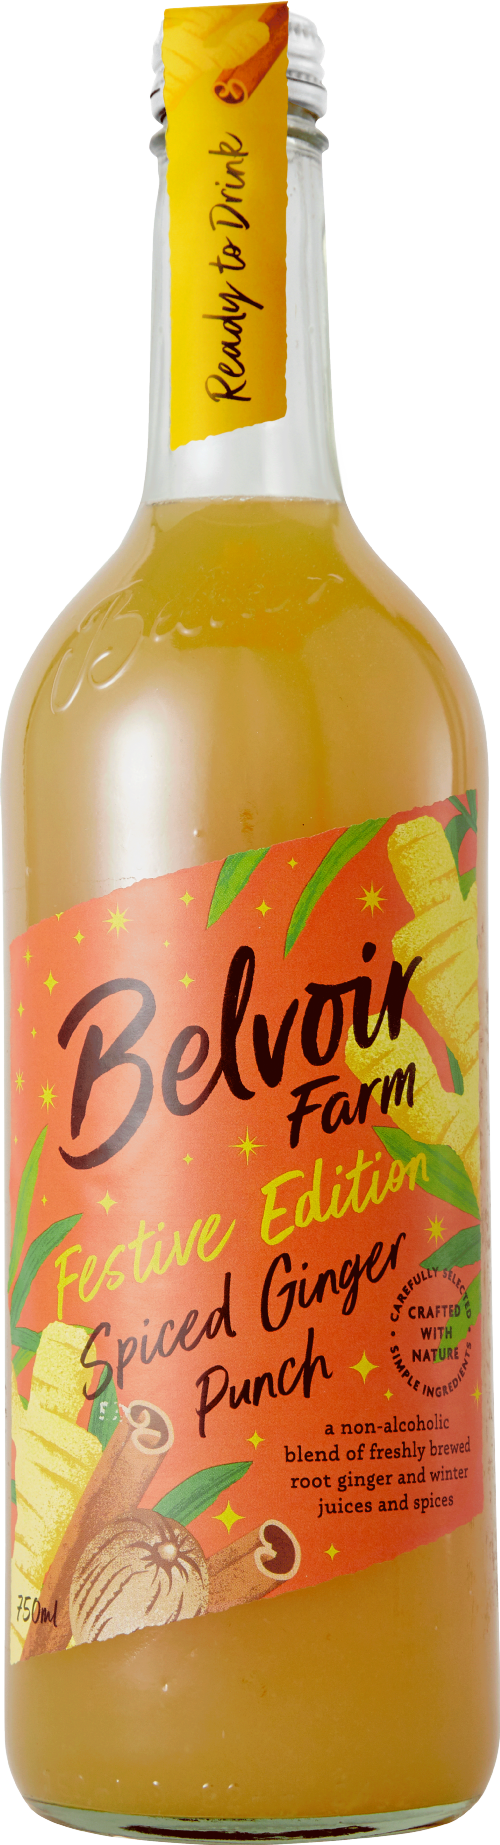 BELVOIR Festive Edition Spiced Ginger Punch 75cl